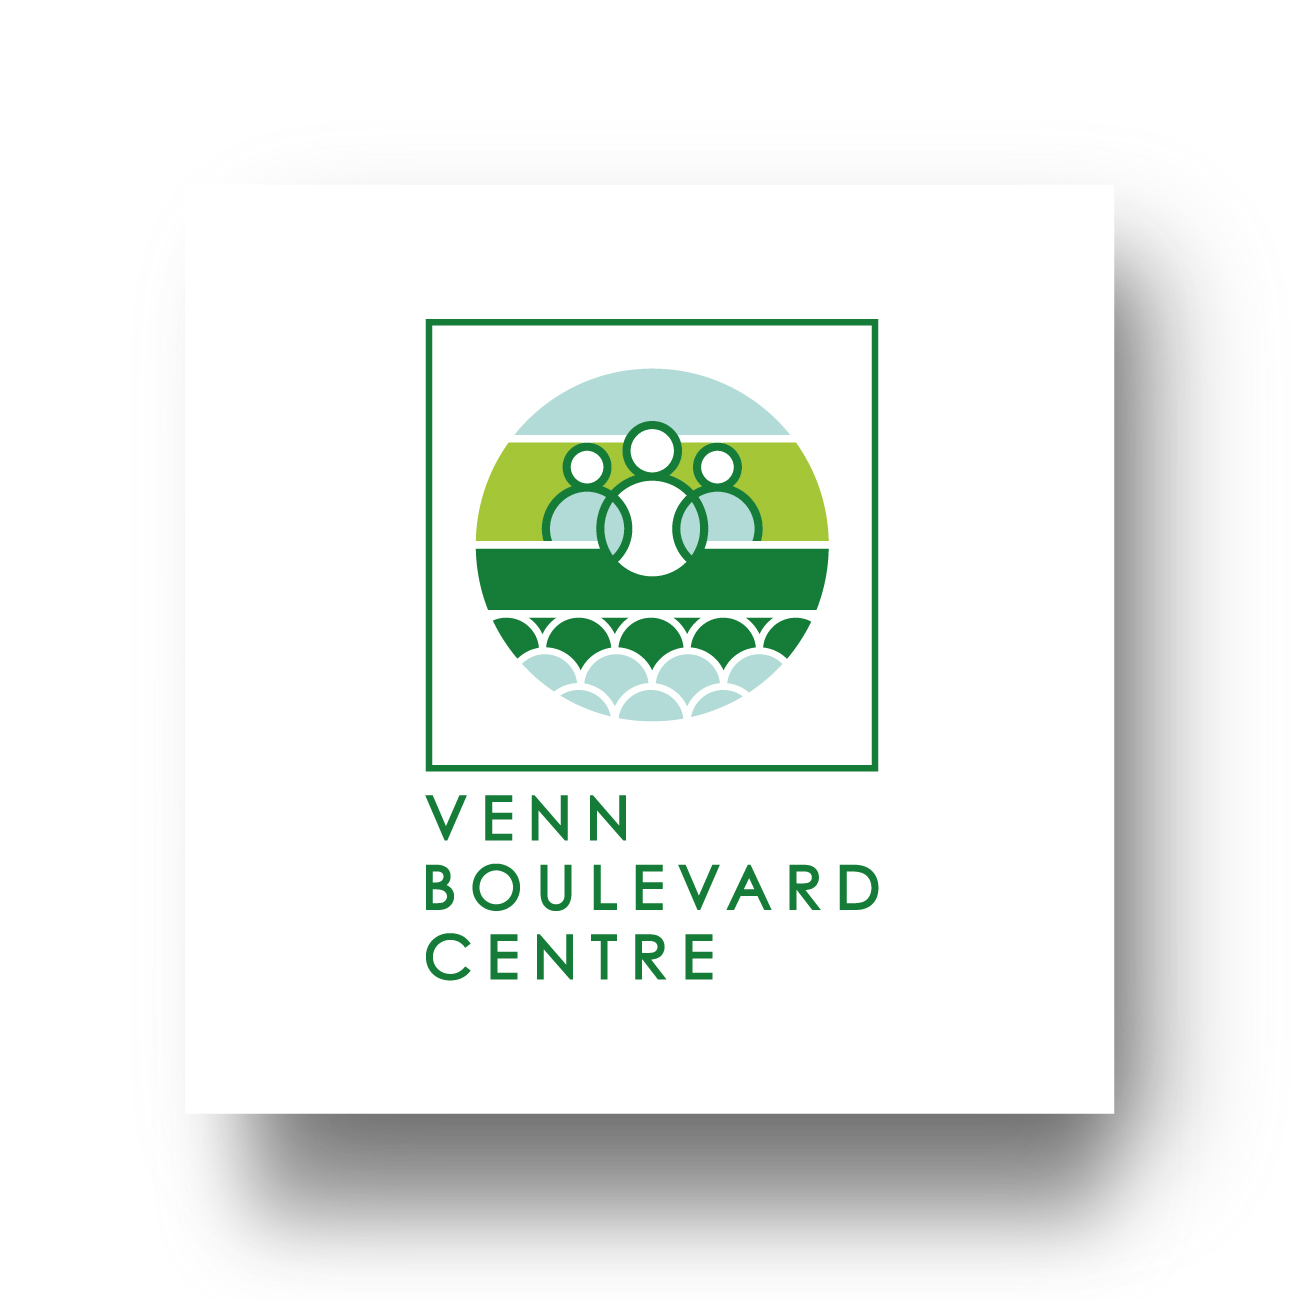 Venn Boulevard Centre logo